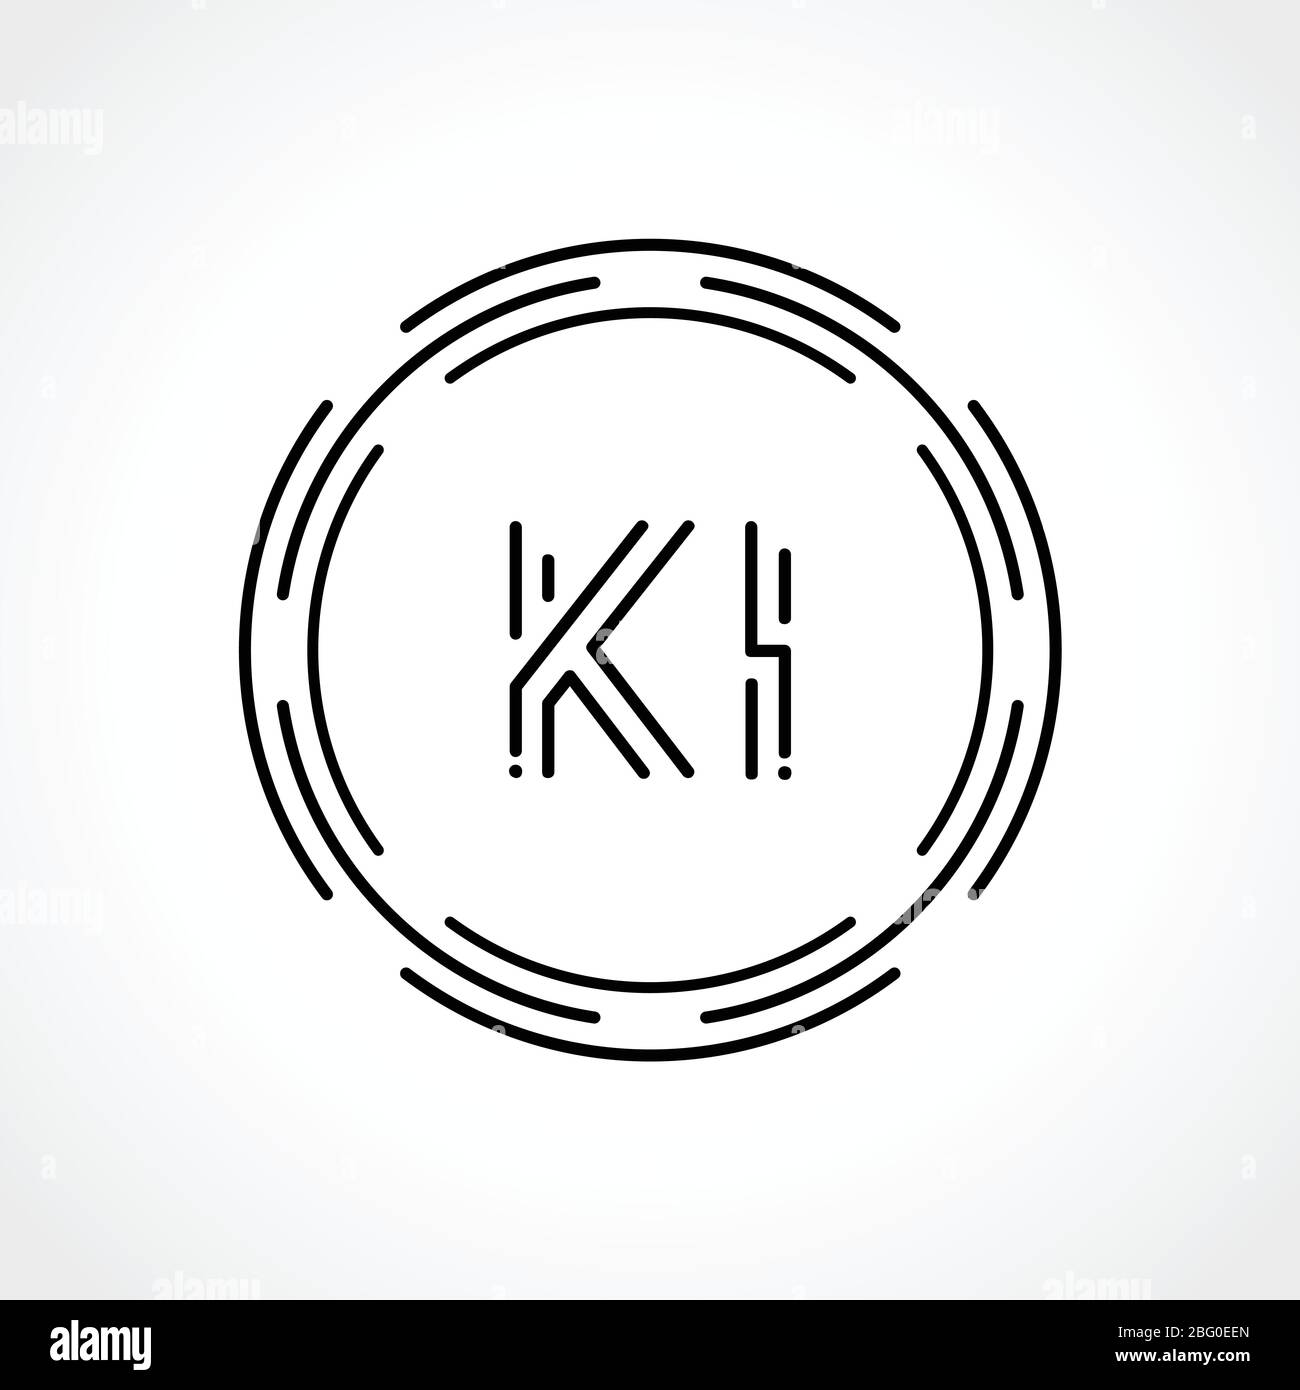 Initial Letter KI Logo Design vector Template. Digital Abstract KI ...